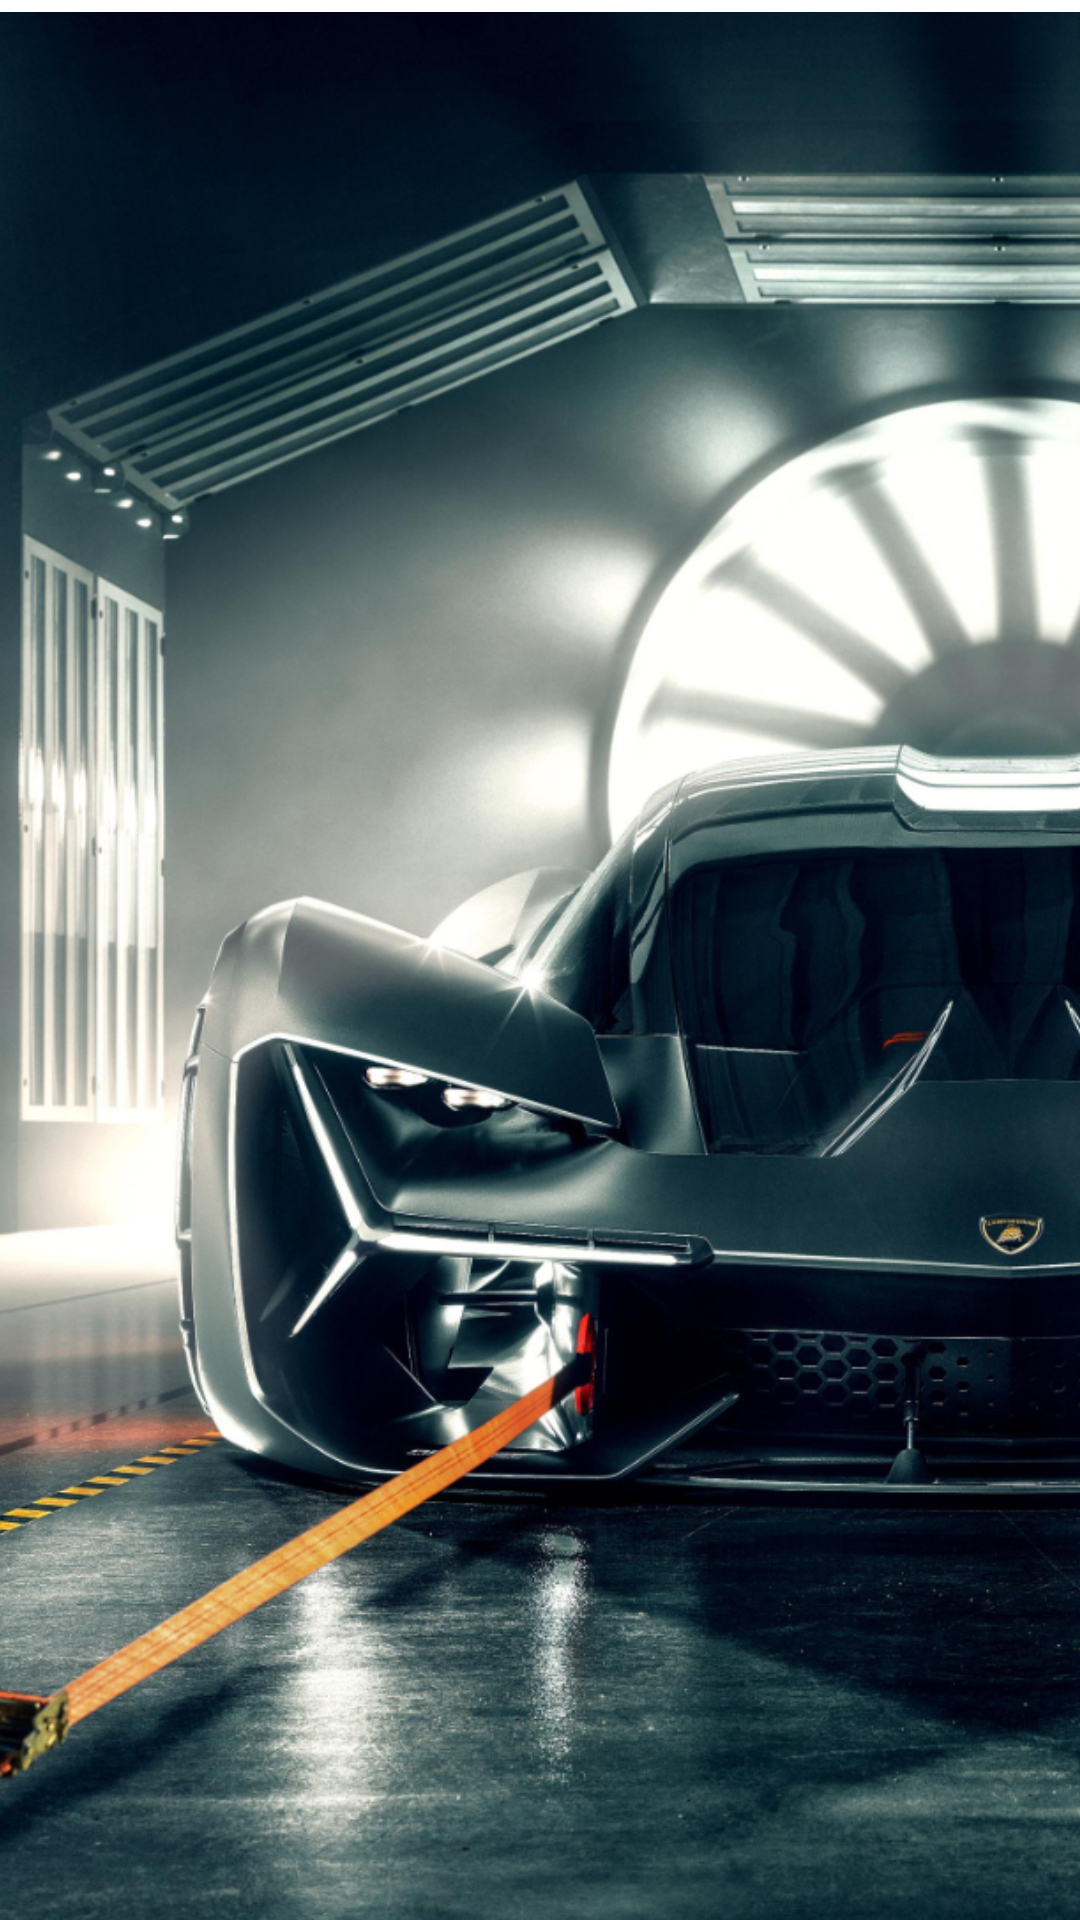 Lamborghini Terzo Millennio - Underground Garage - Finished